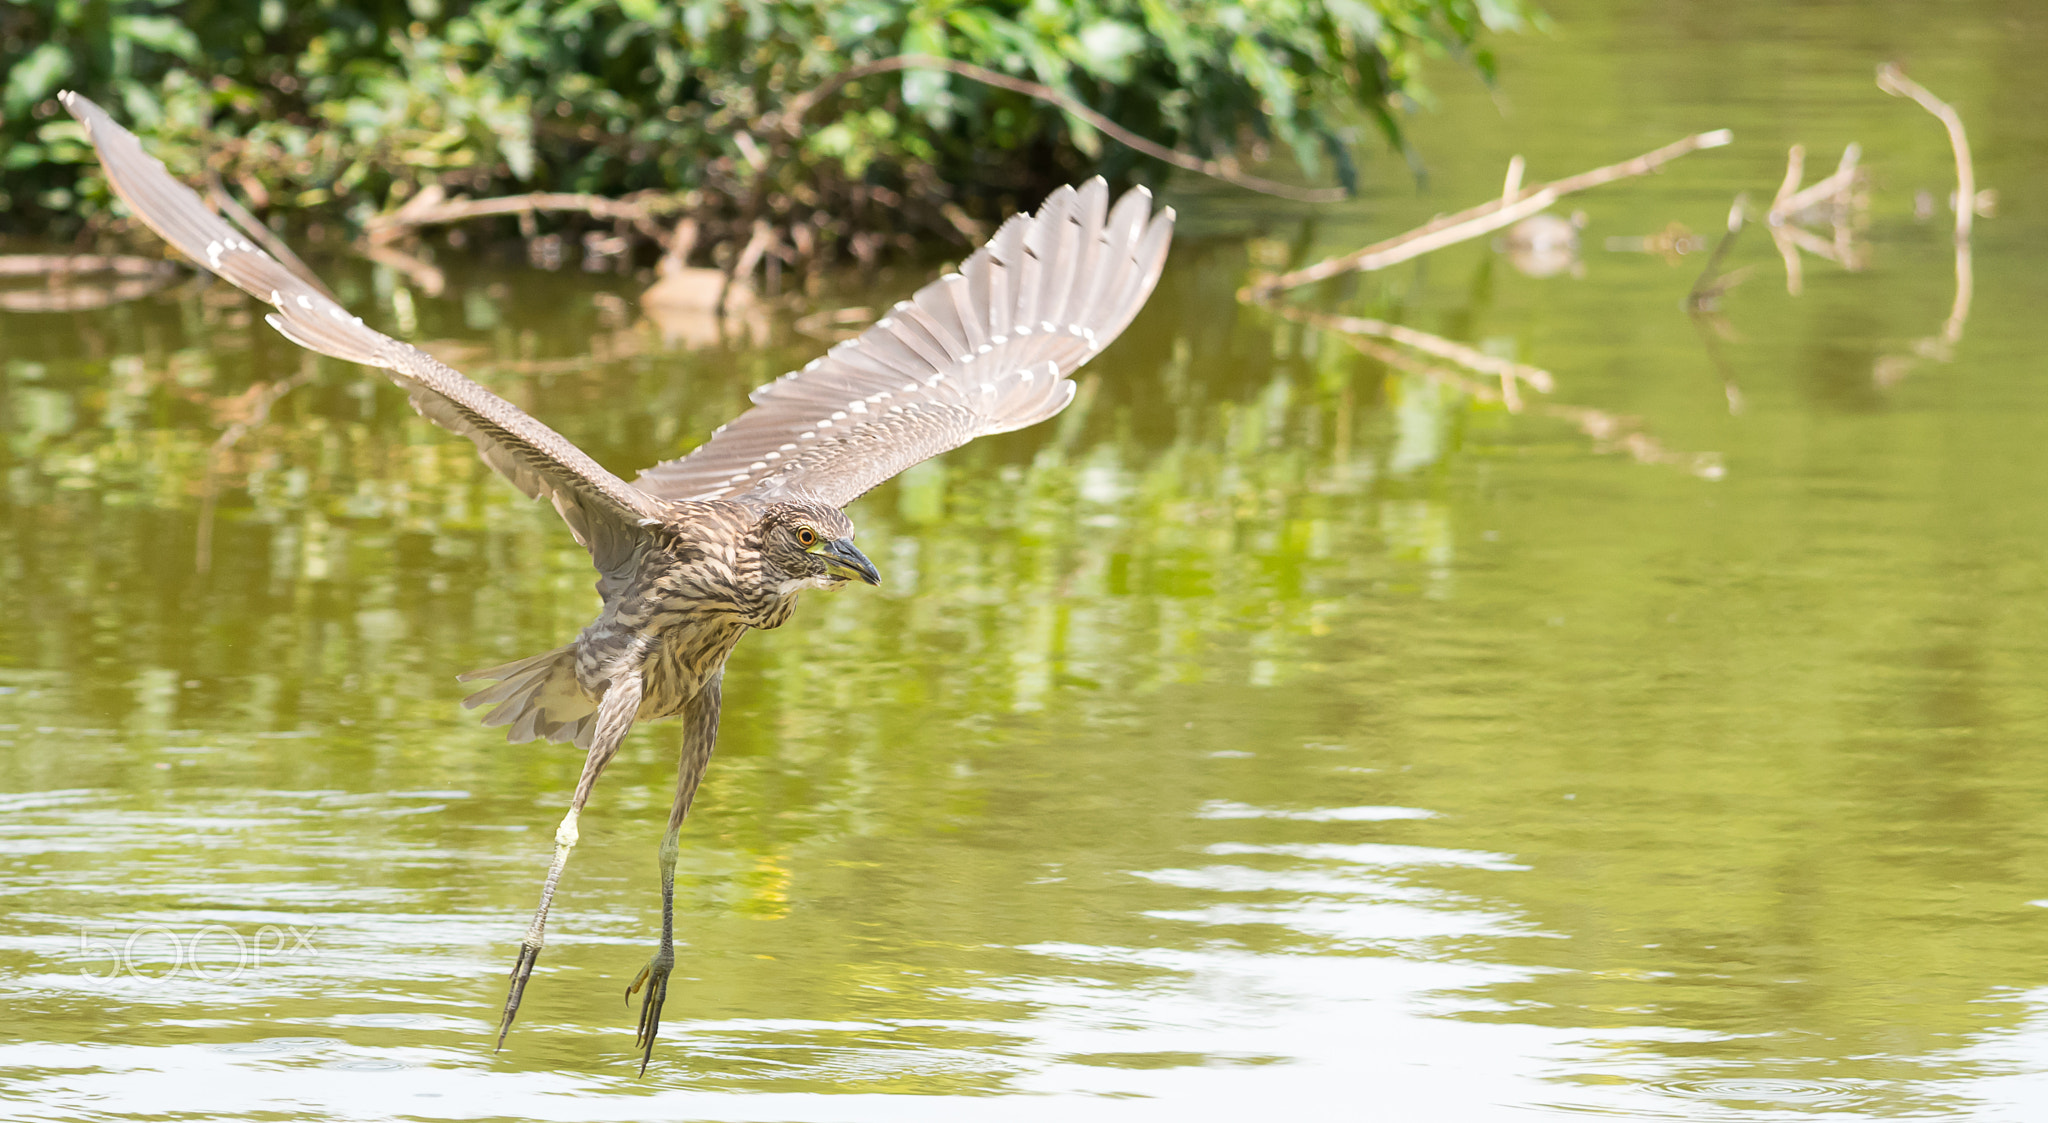 Young savacu flying over the lake.